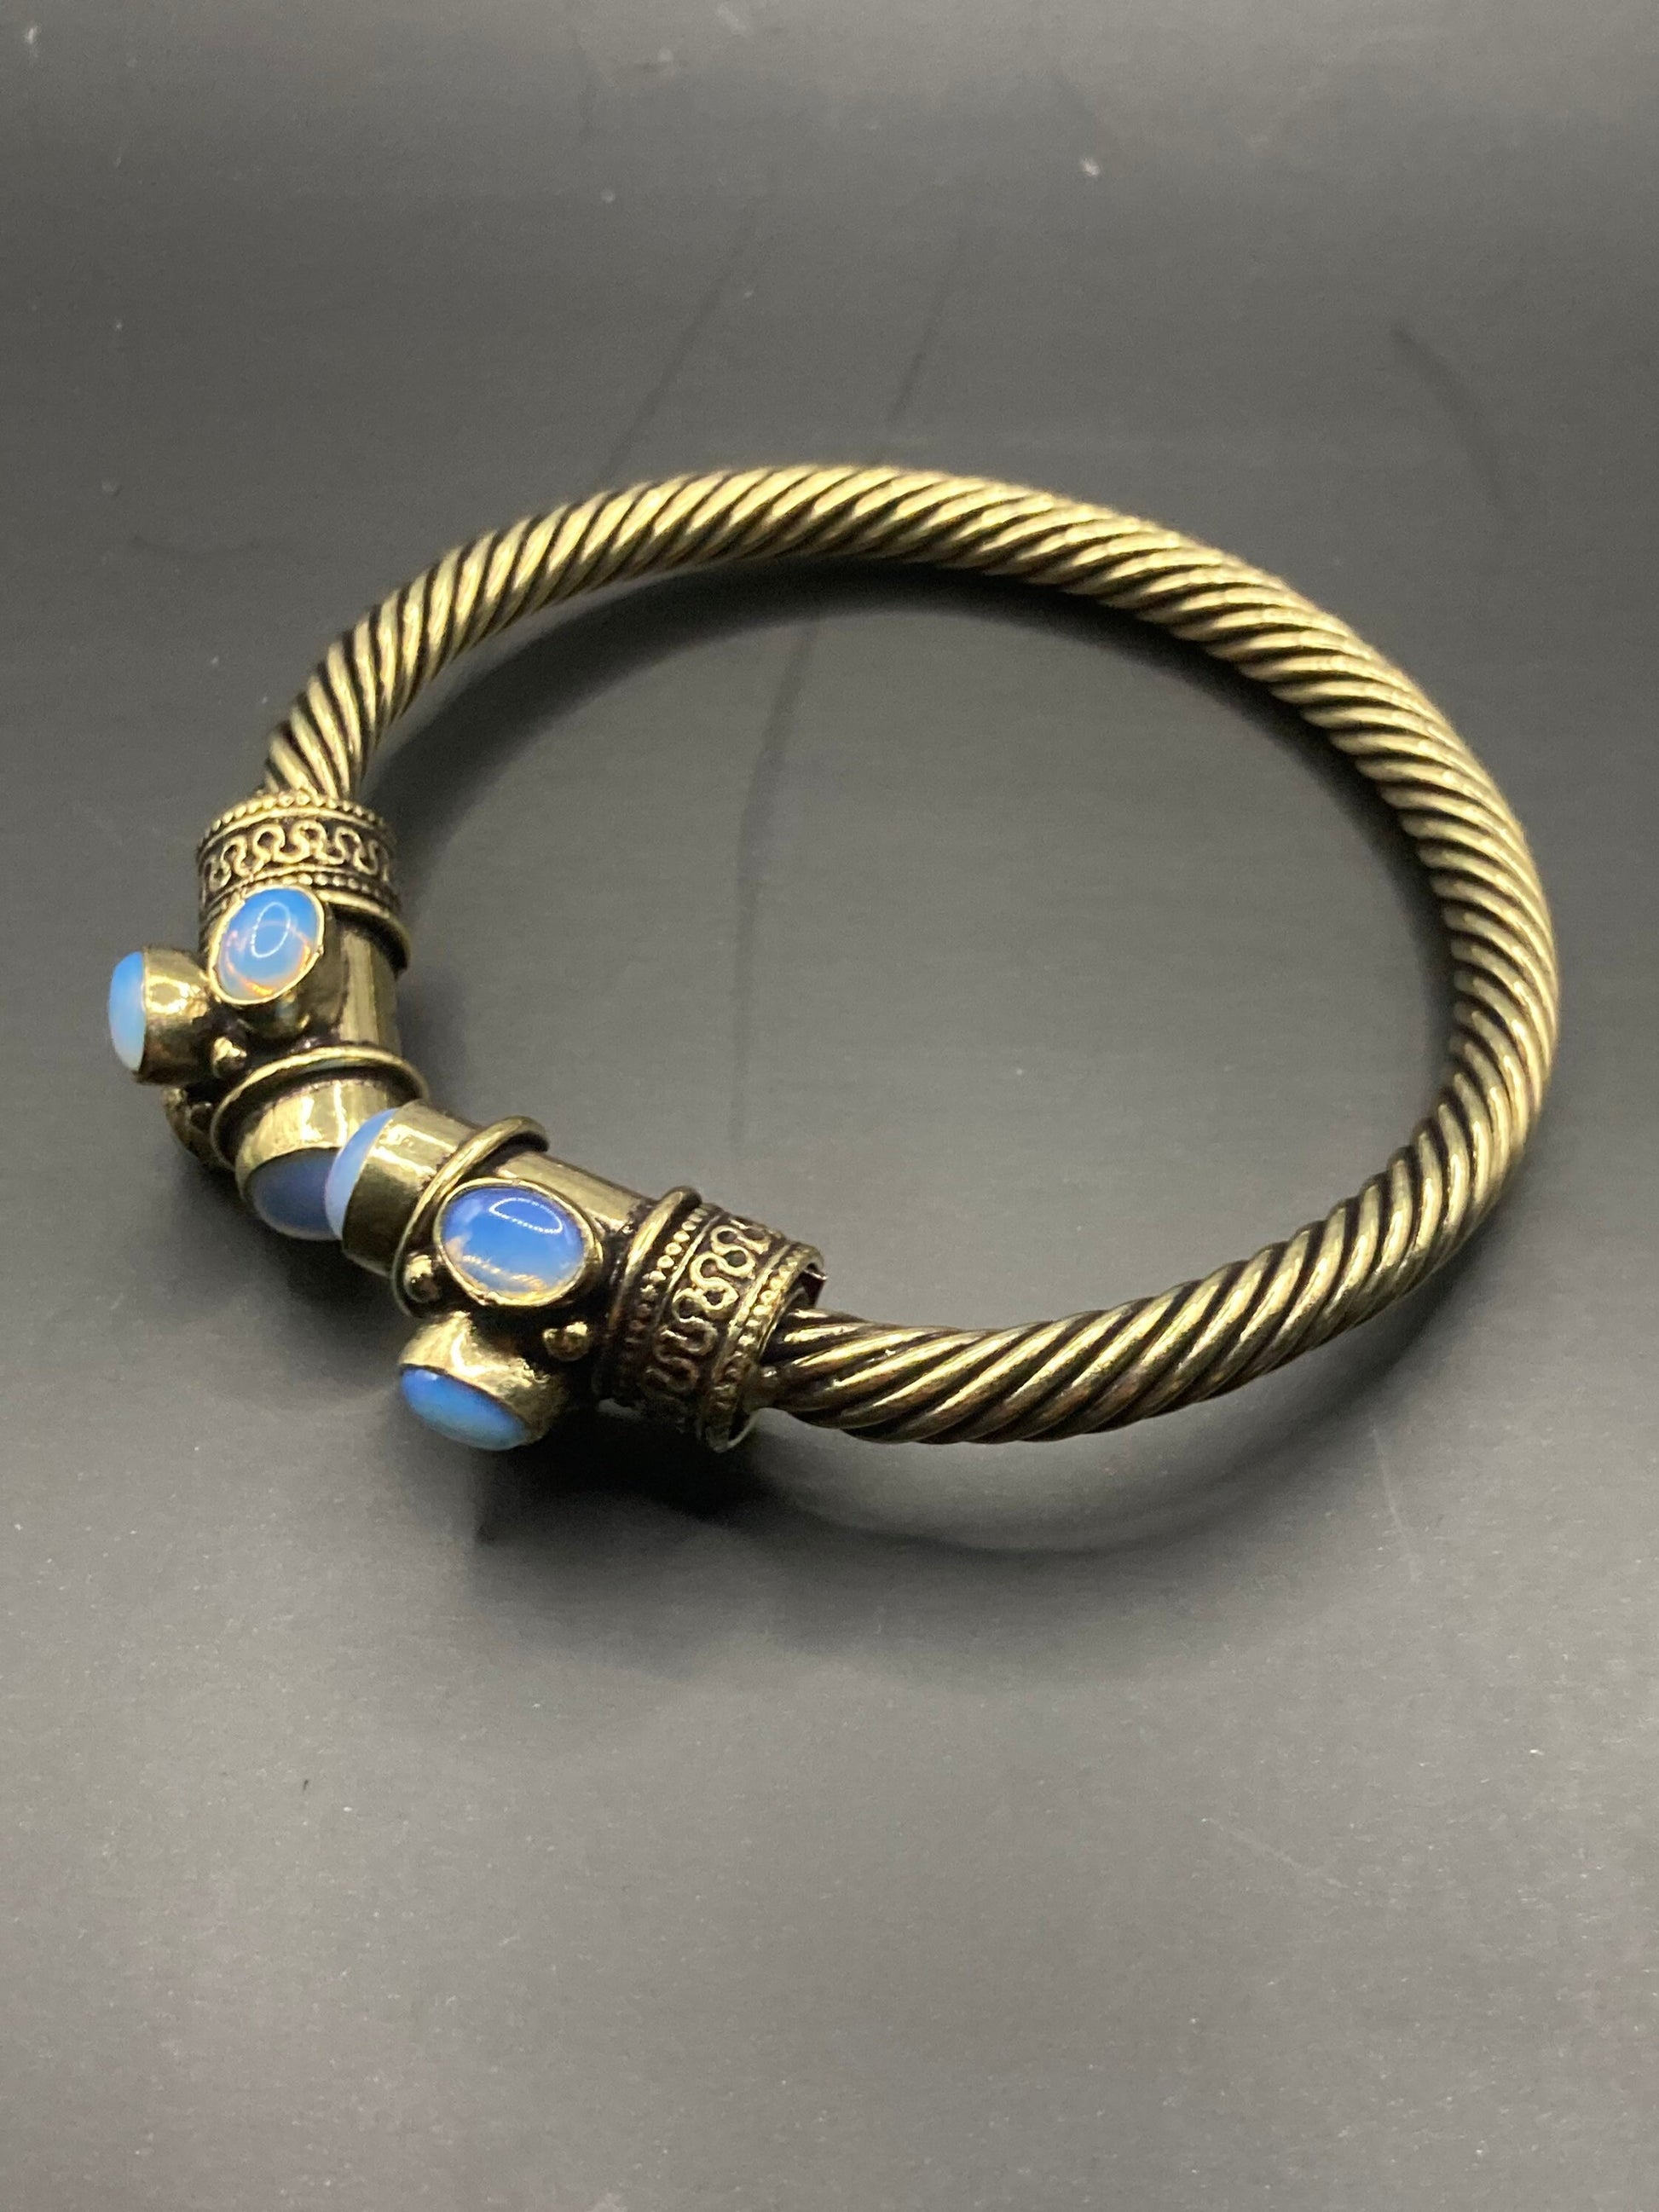 Moonstone labrodorite GEMSTONE Bangle brass gold tone cuff bracelet